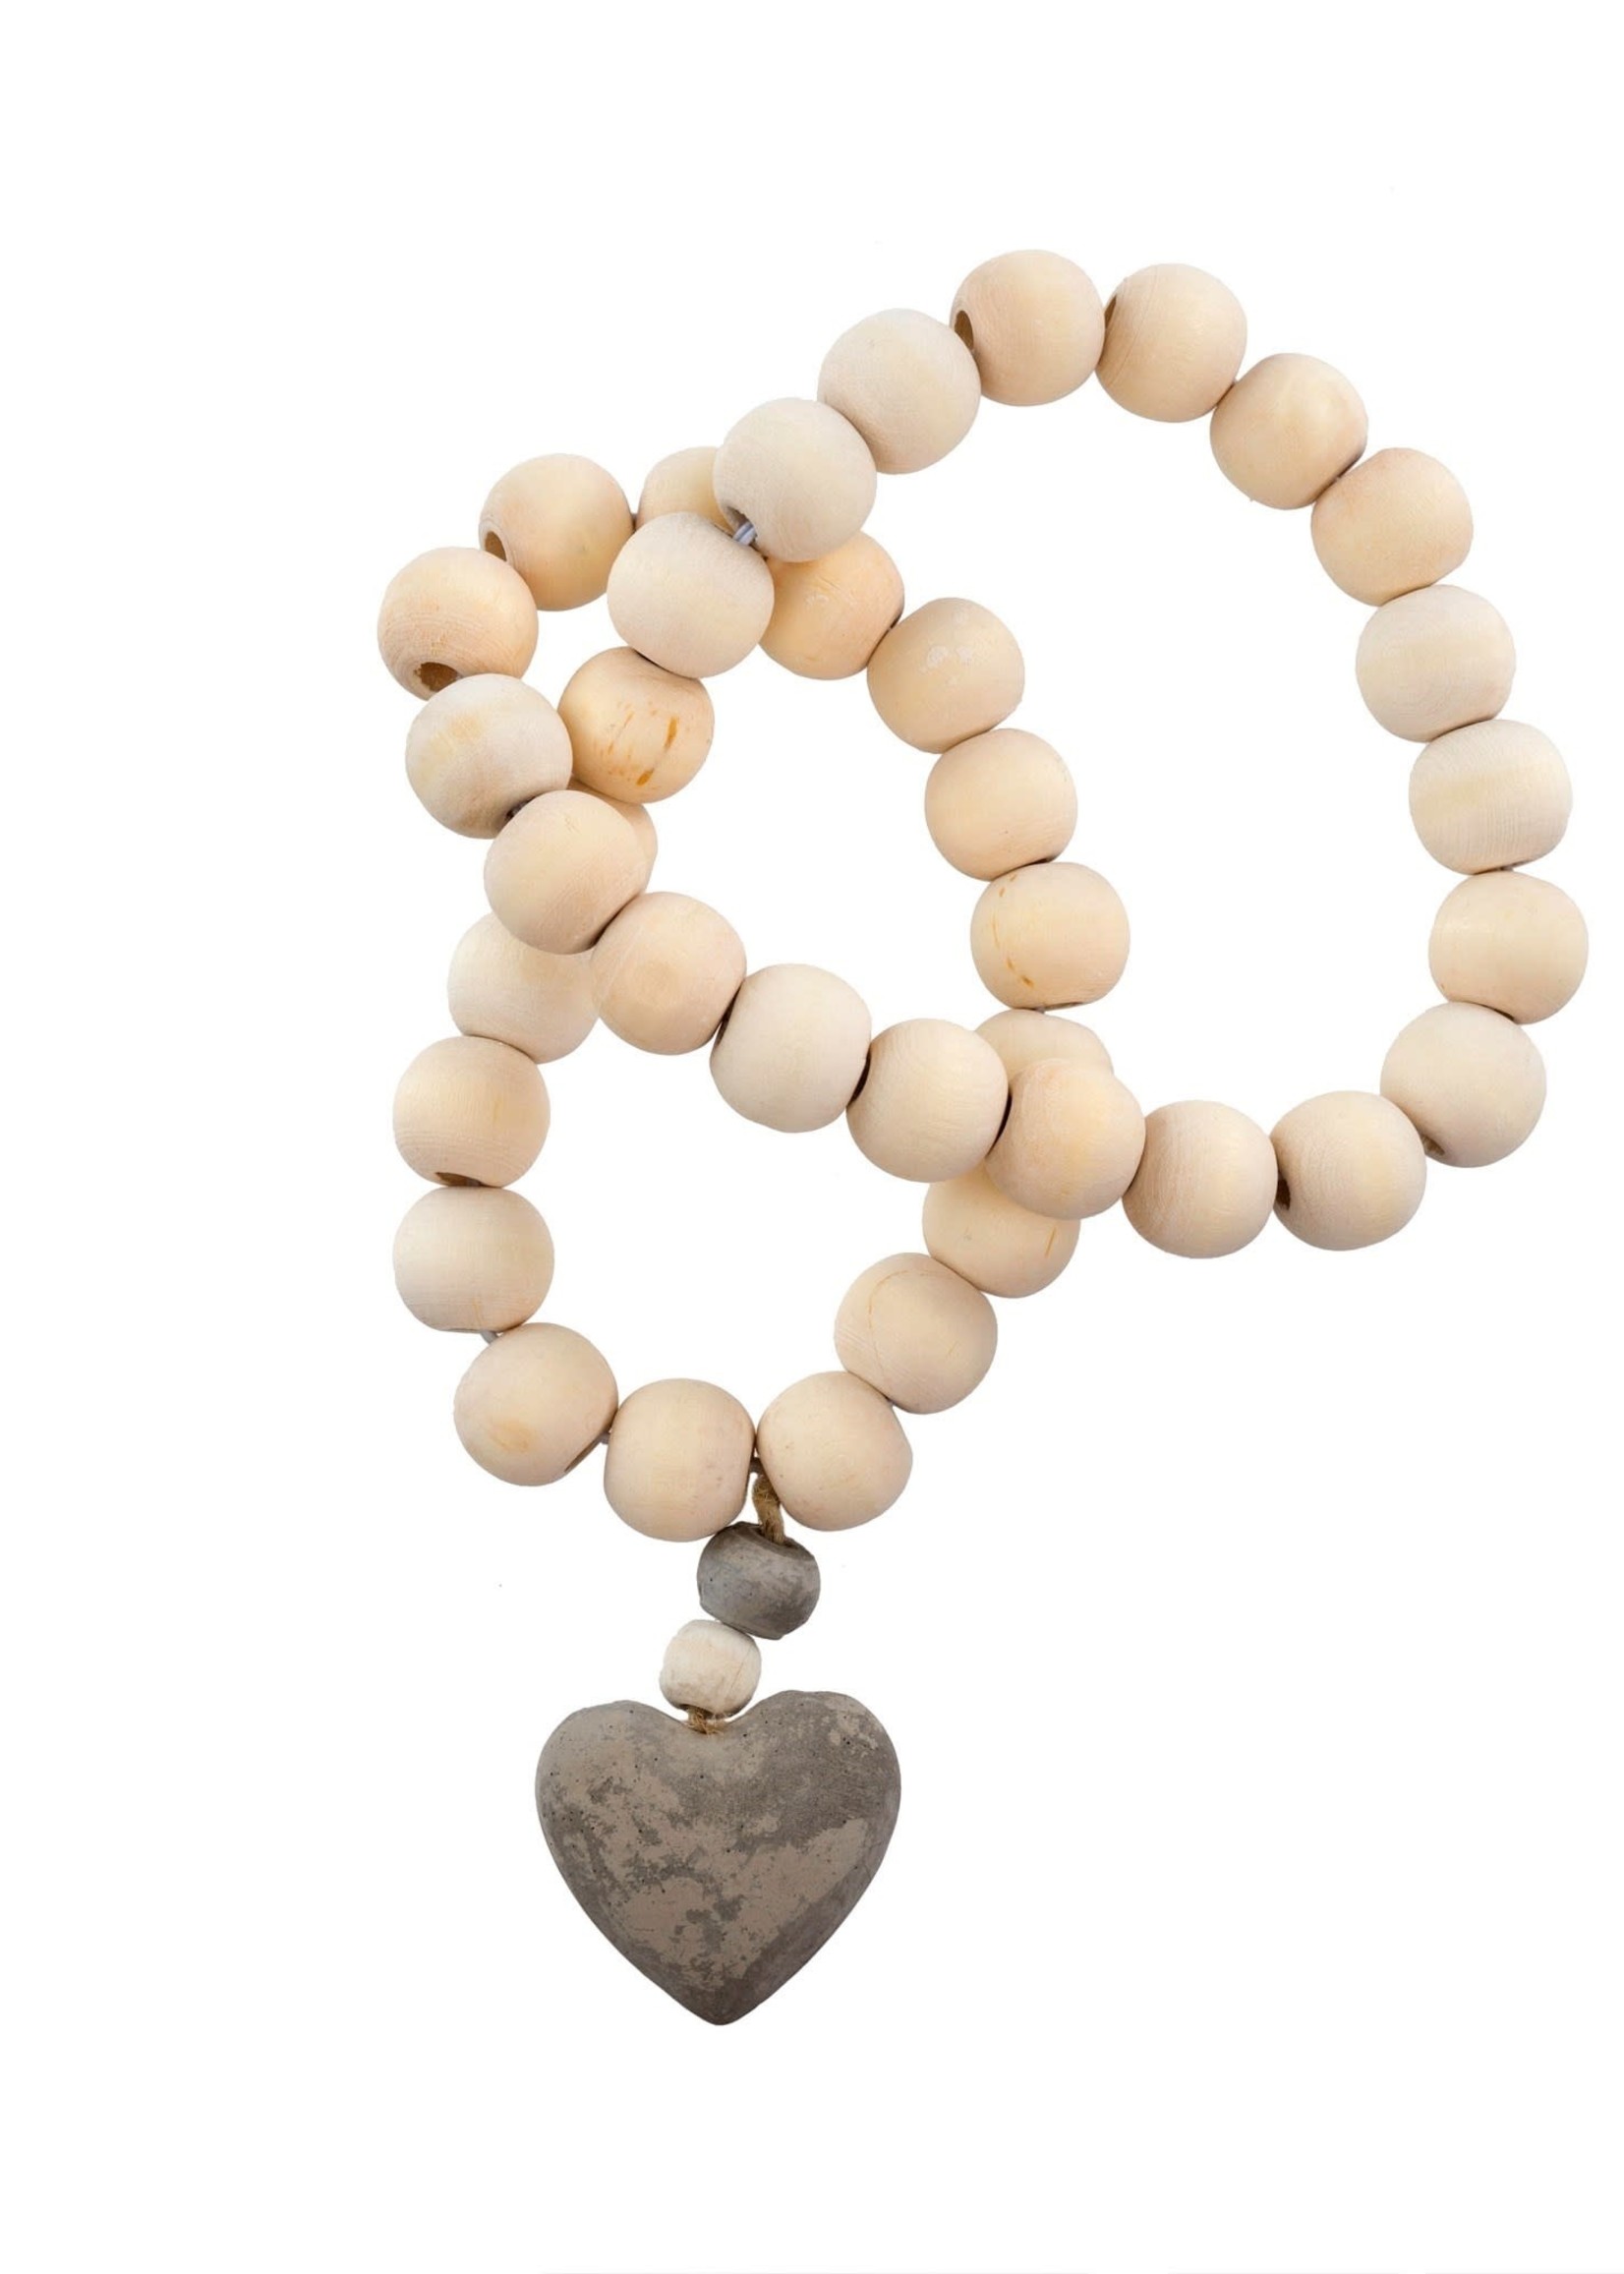 Indaba Trading Co Concrete Heart Prayer Beads | Small